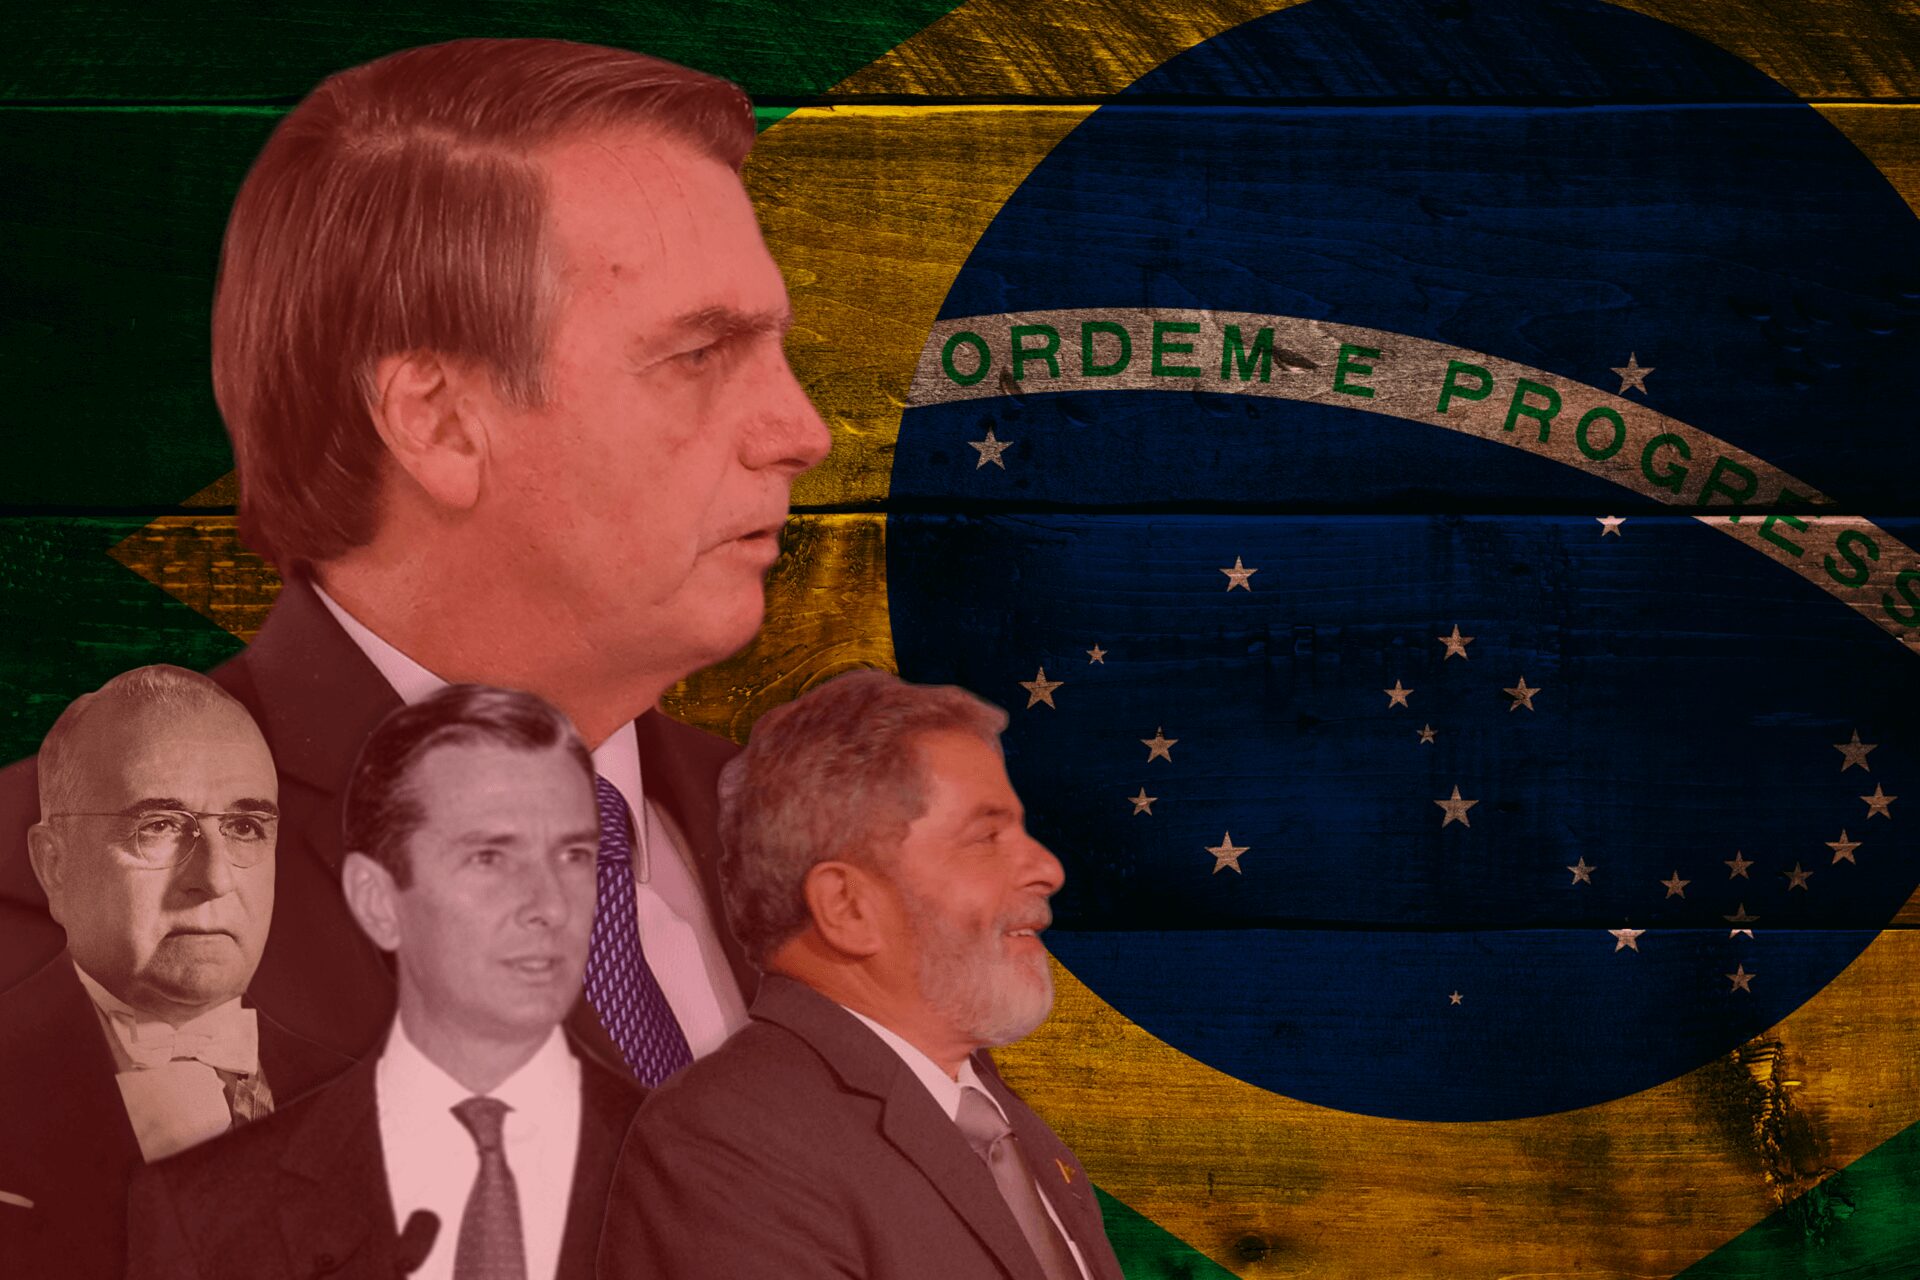 Brazil, Bolsonaro, and Barreto: Populism, People, and Public